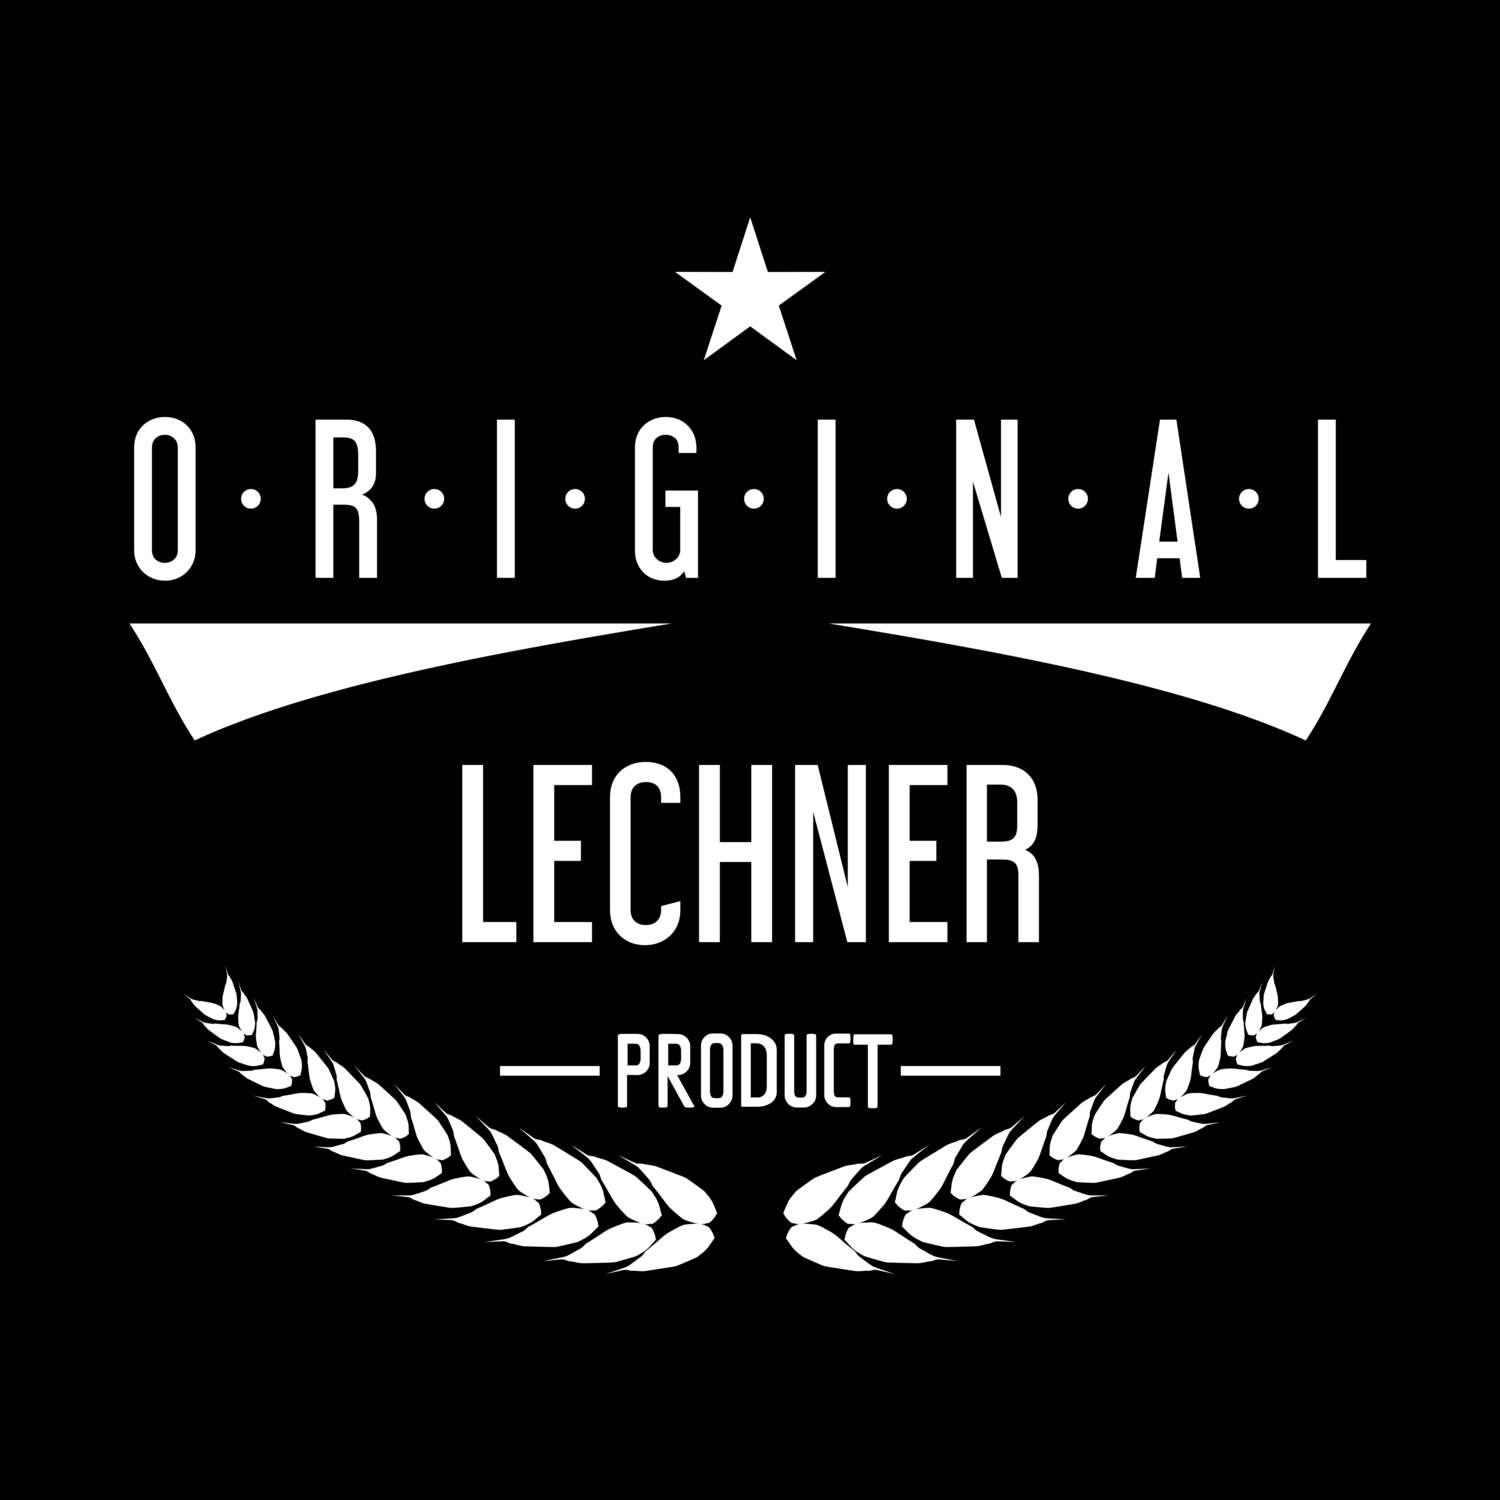 Lechner T-Shirt »Original Product«